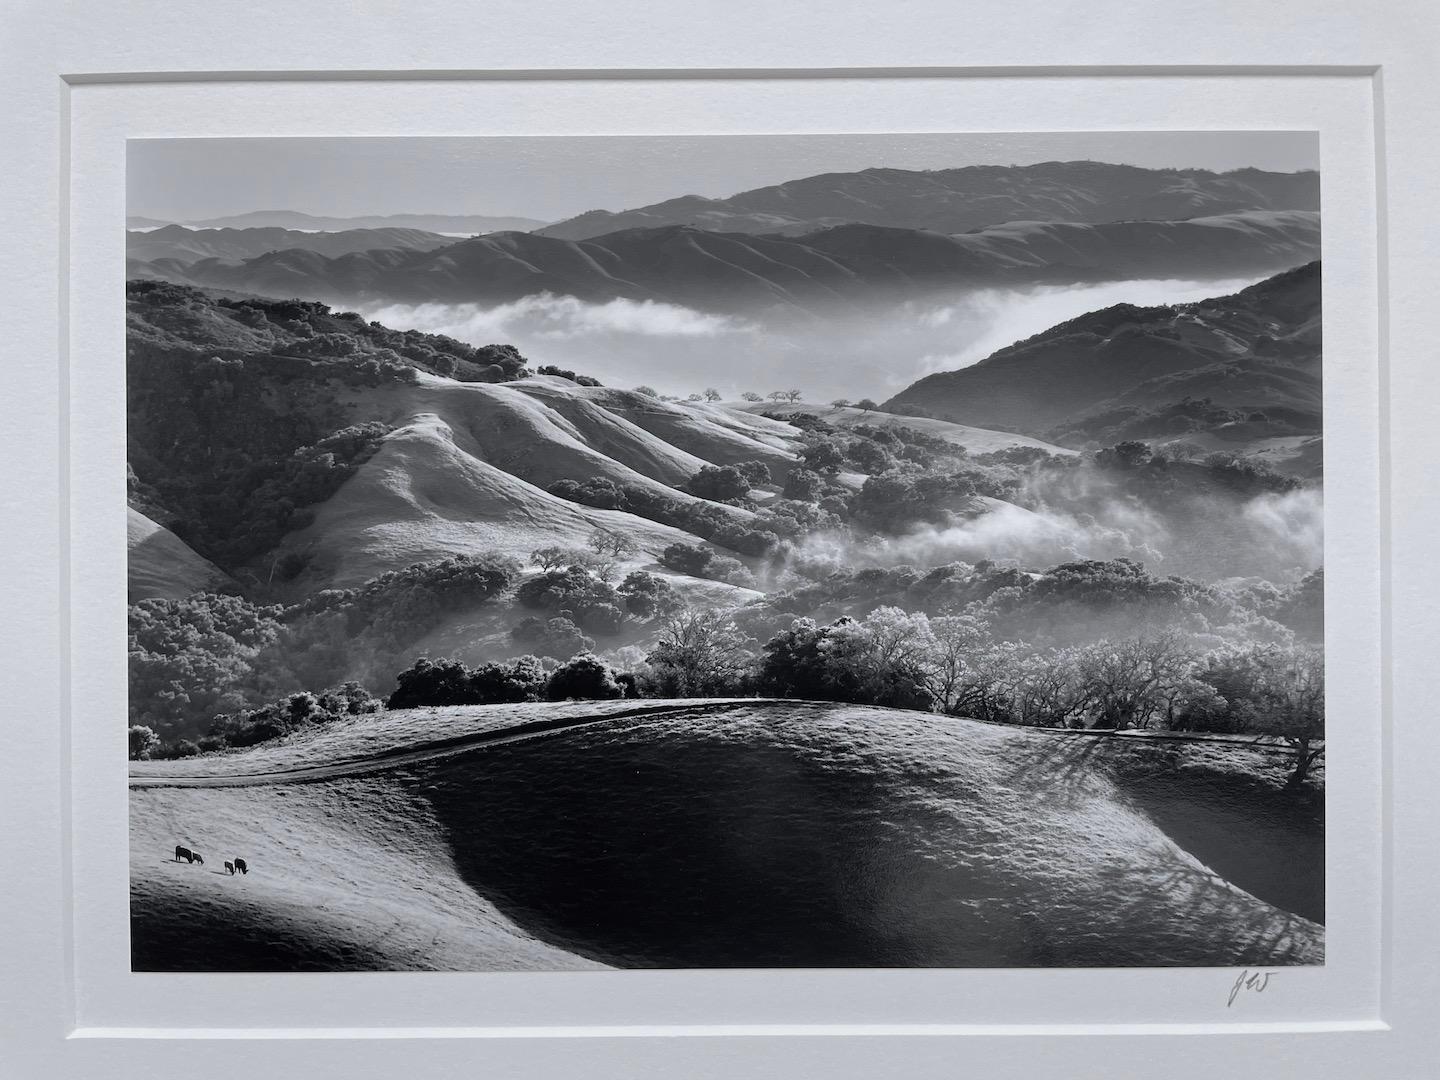 John Wimberley Landscape Photograph - Carmel Valley From Halls Ridge, California Hills